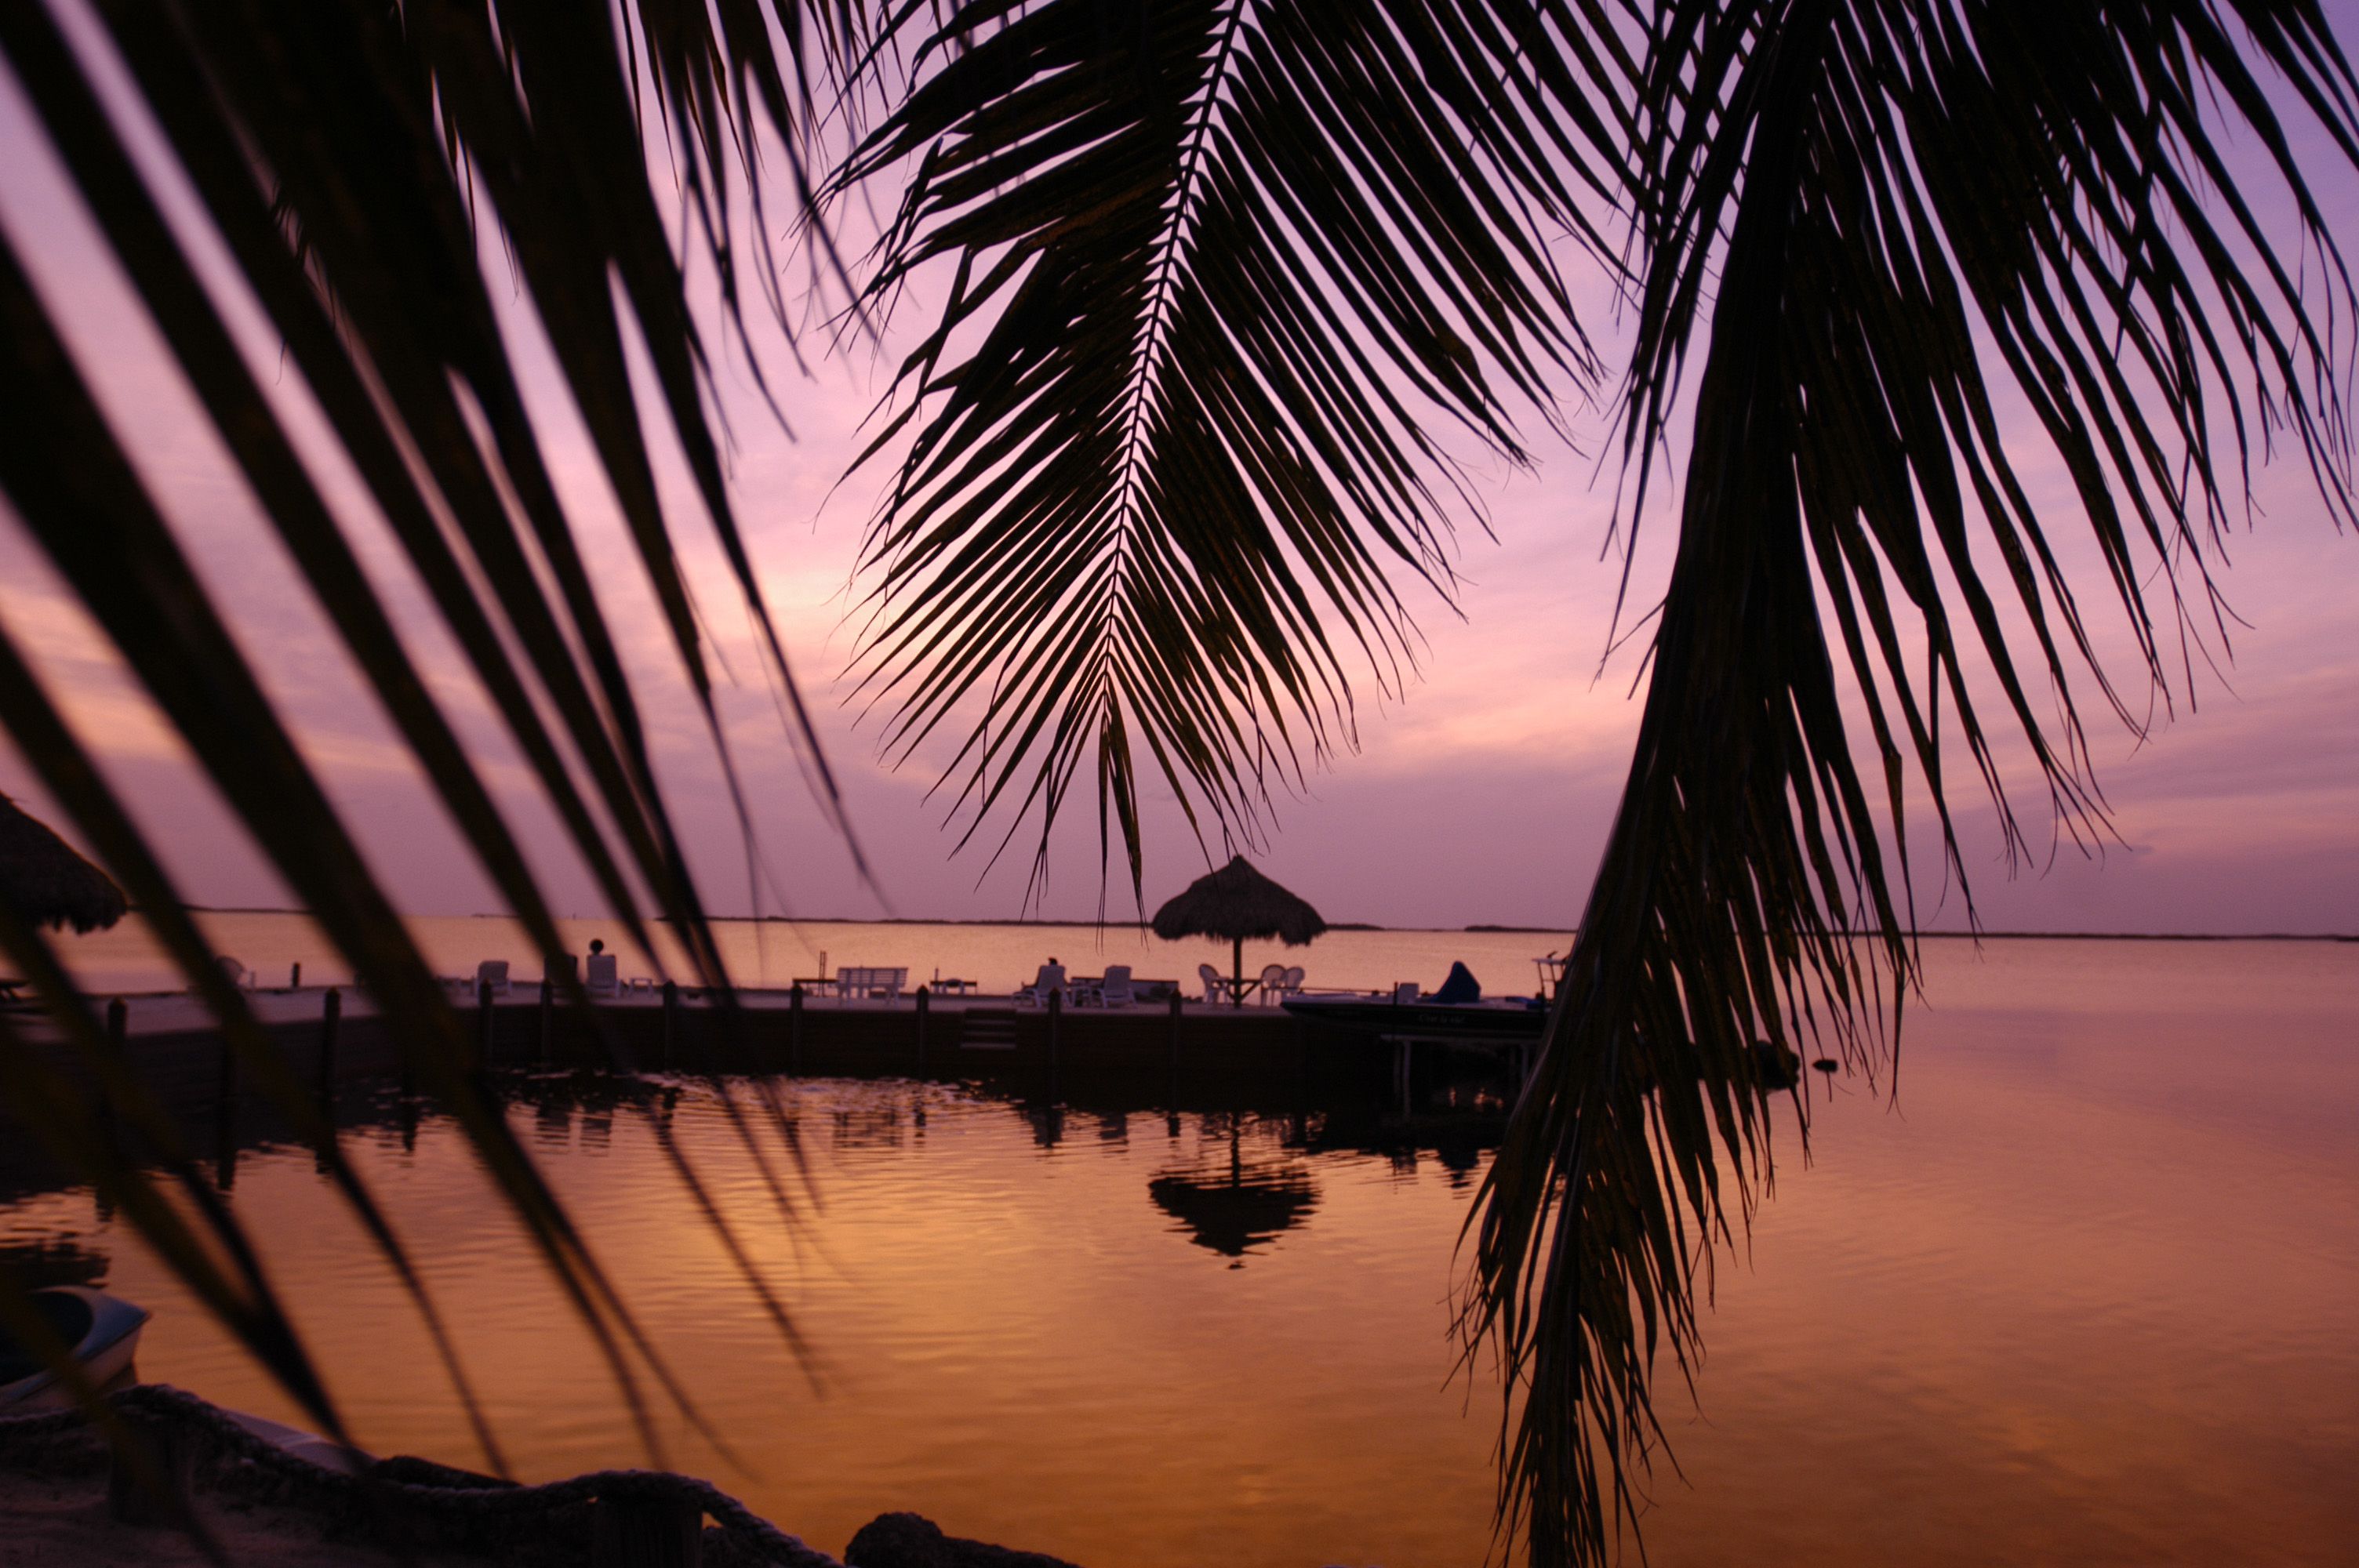 Florida Keys: Florida's Year Round Vacation Destination